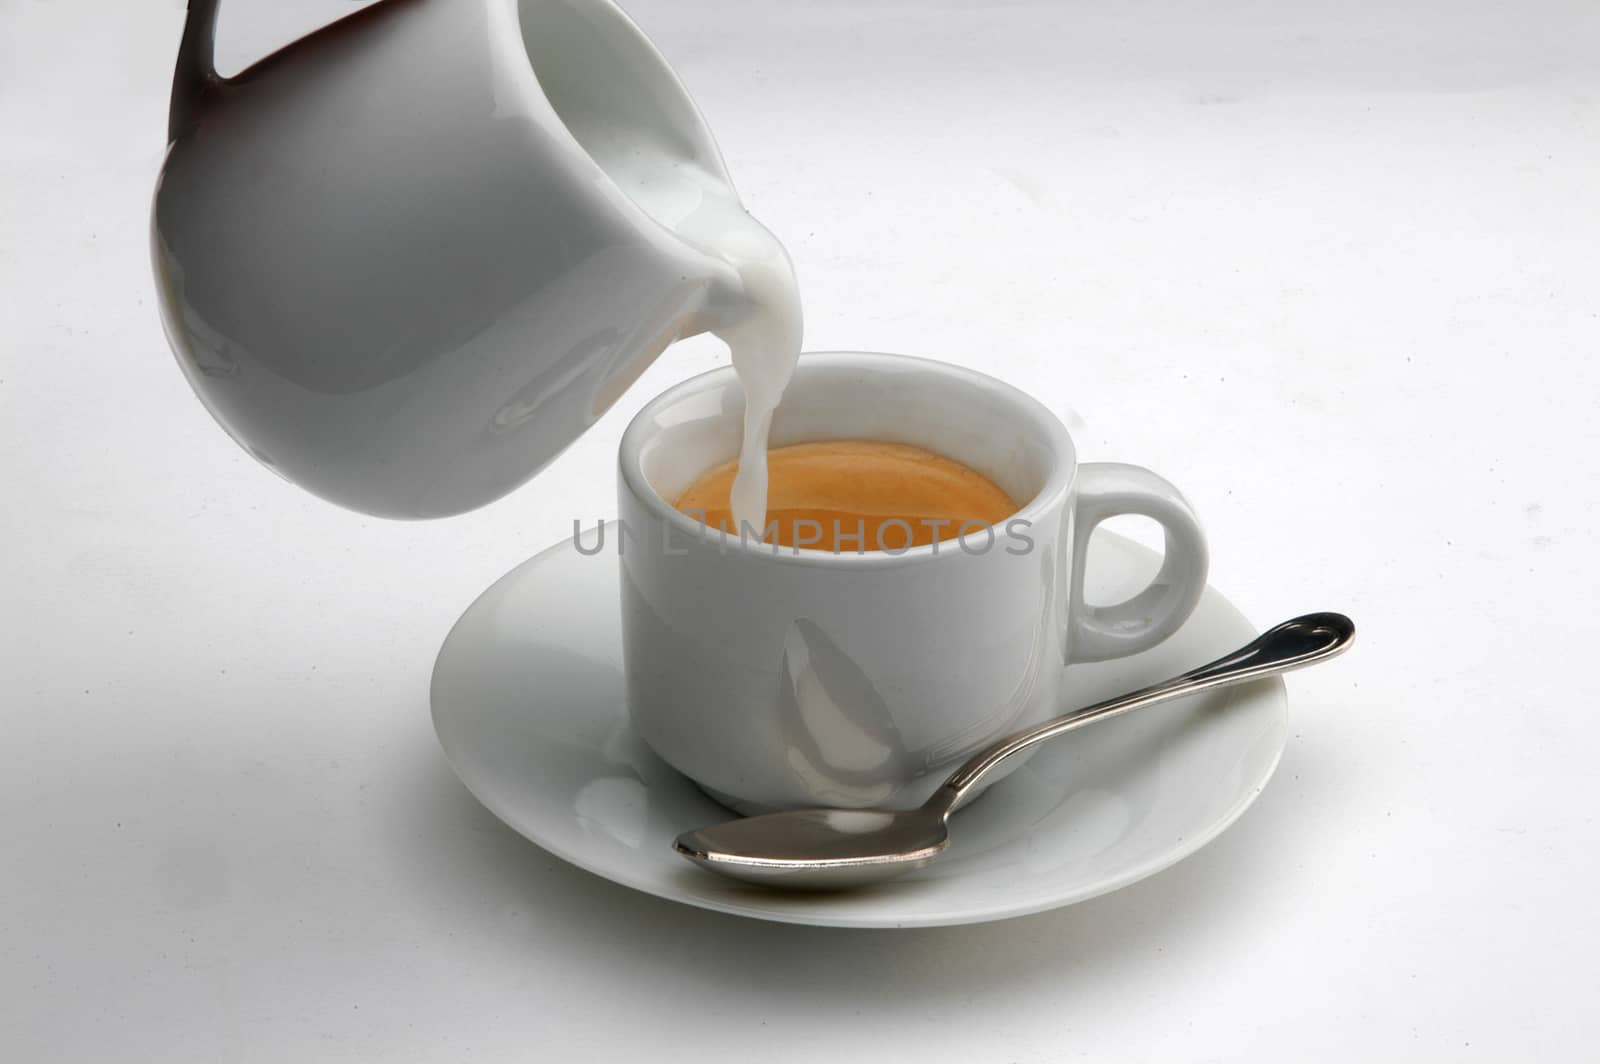 italian espresso cup and milk by diecidodici